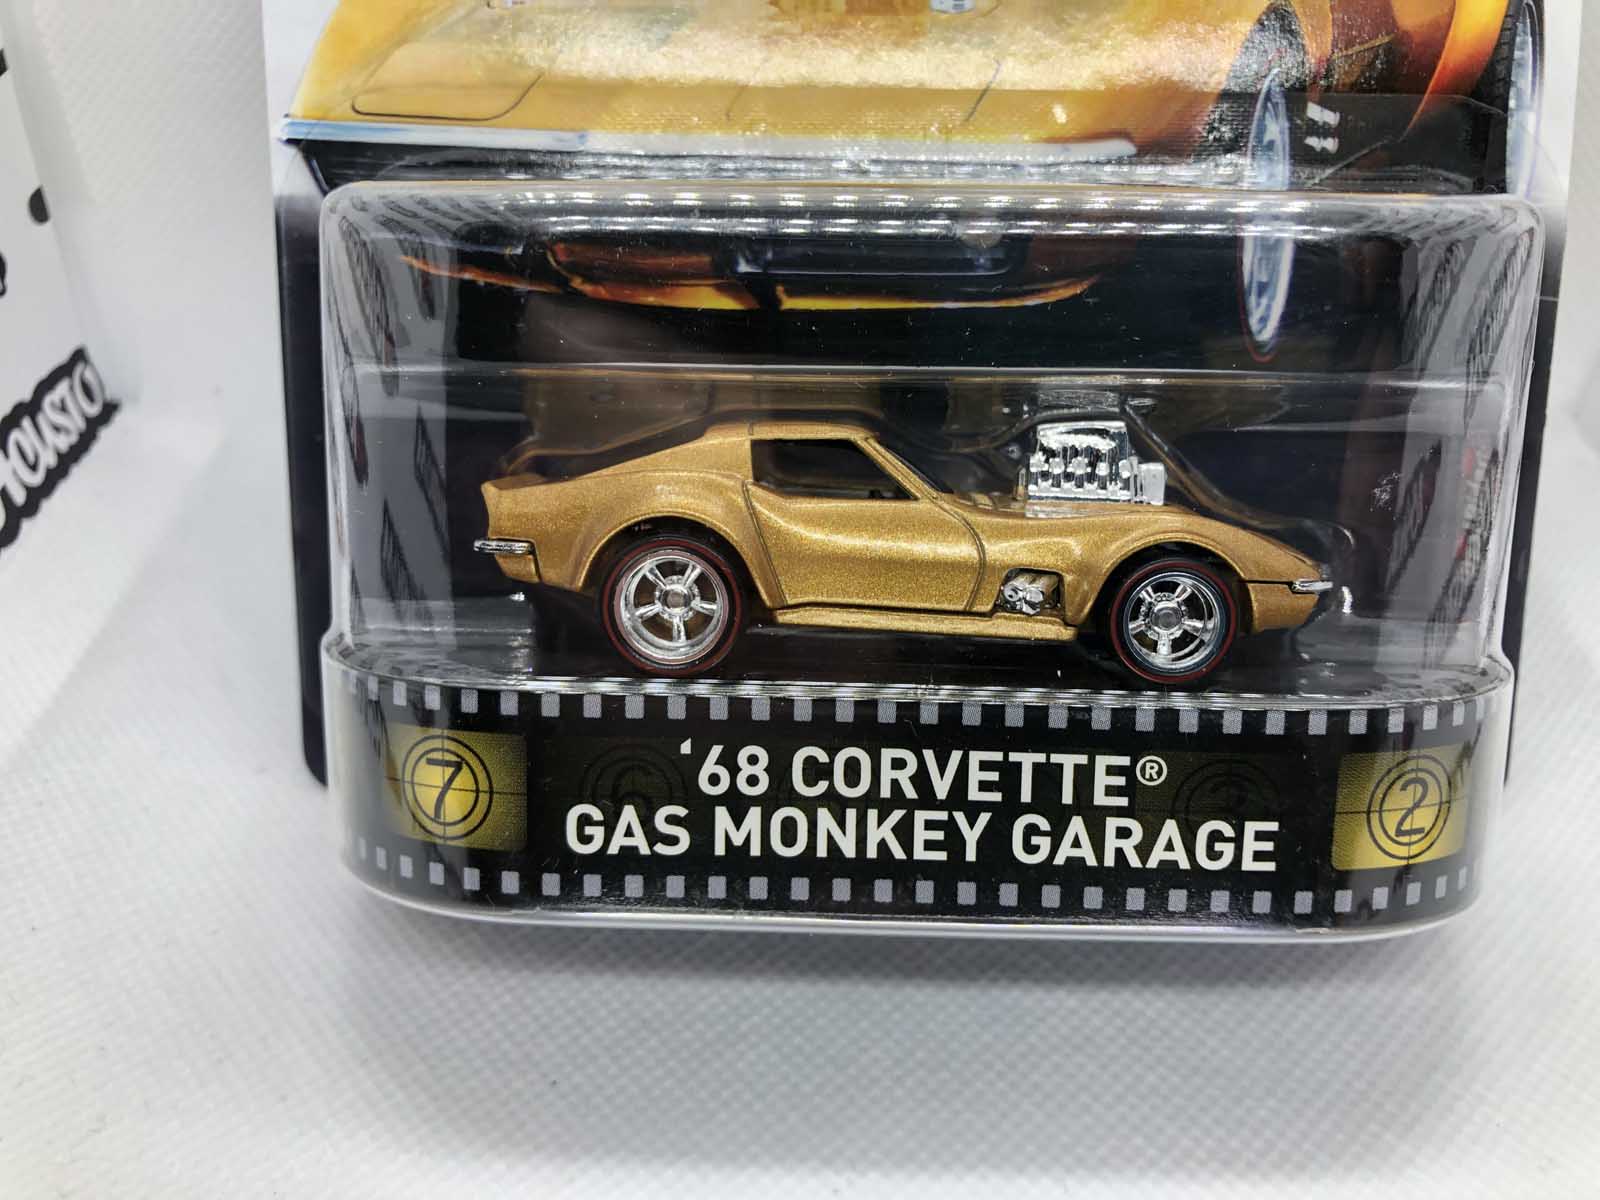 68 Corvette - Gas Monkey Garage Hot Wheels